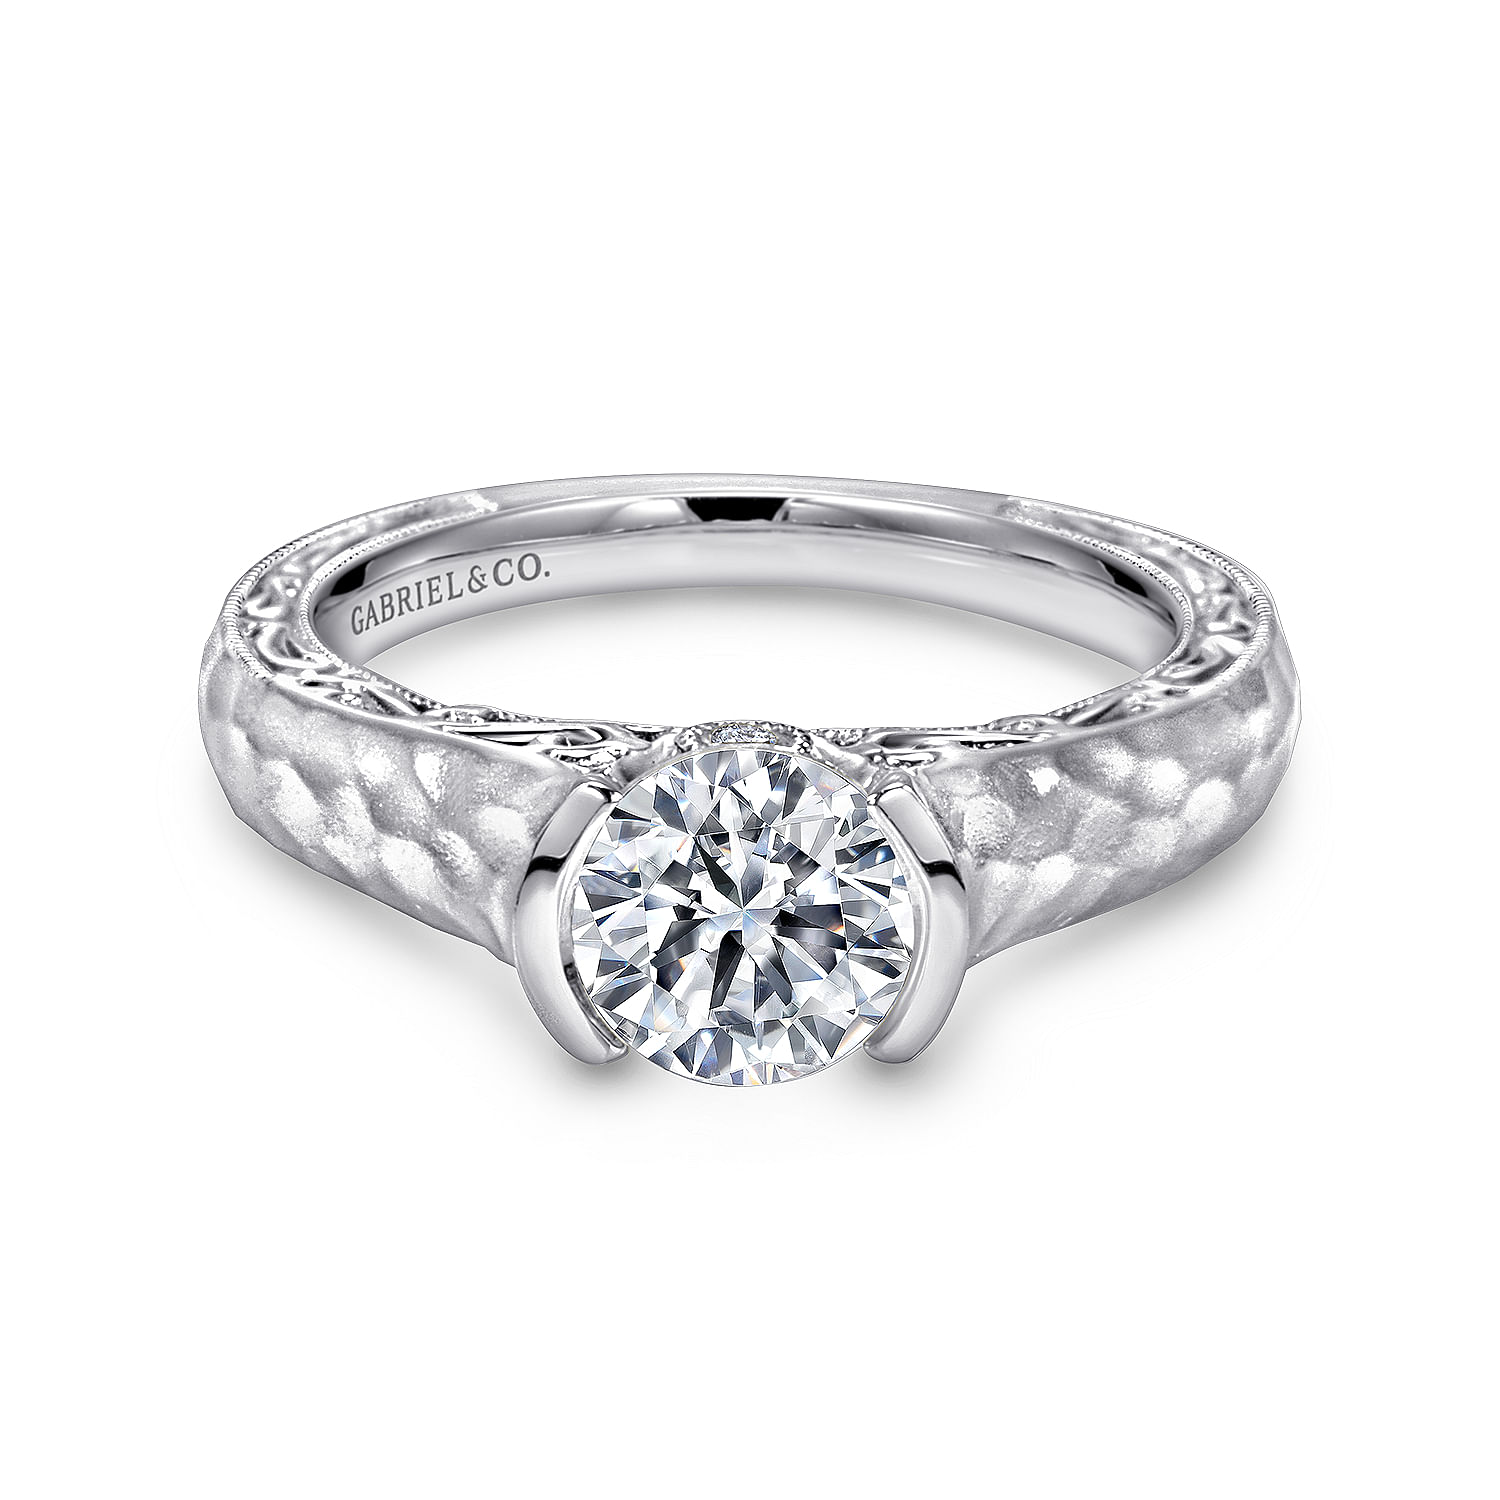 Kiera - Vintage Inspired 14K White Gold Round Diamond Engagement Ring